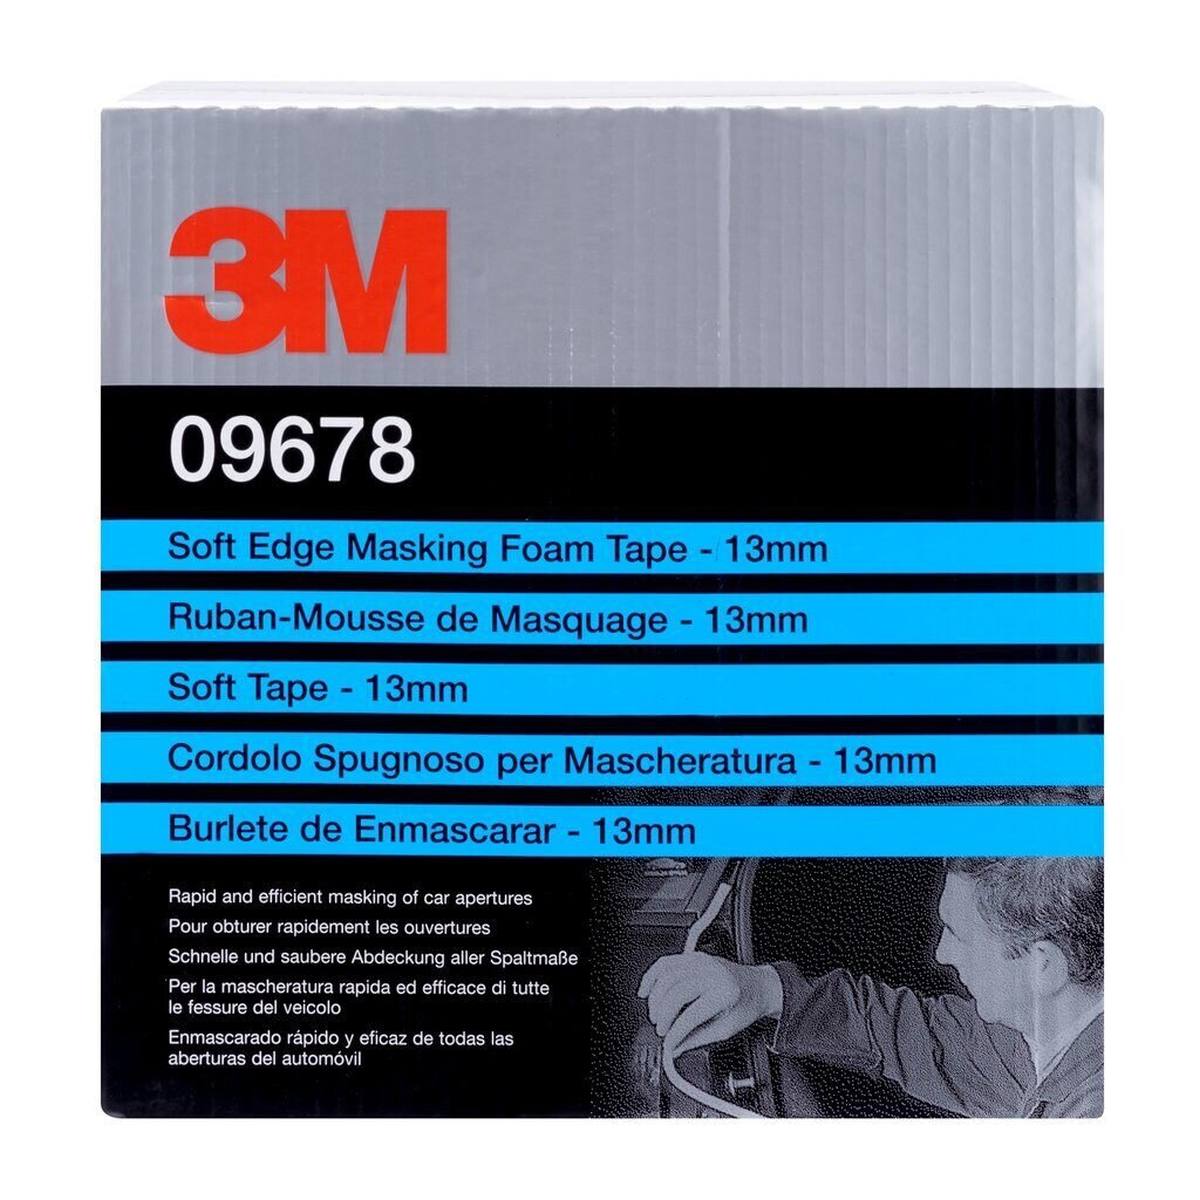 3M Soft Edge Foam Masking Tape, Blanco, 50 m x 13 mm, 1pack = 3pcs #09678